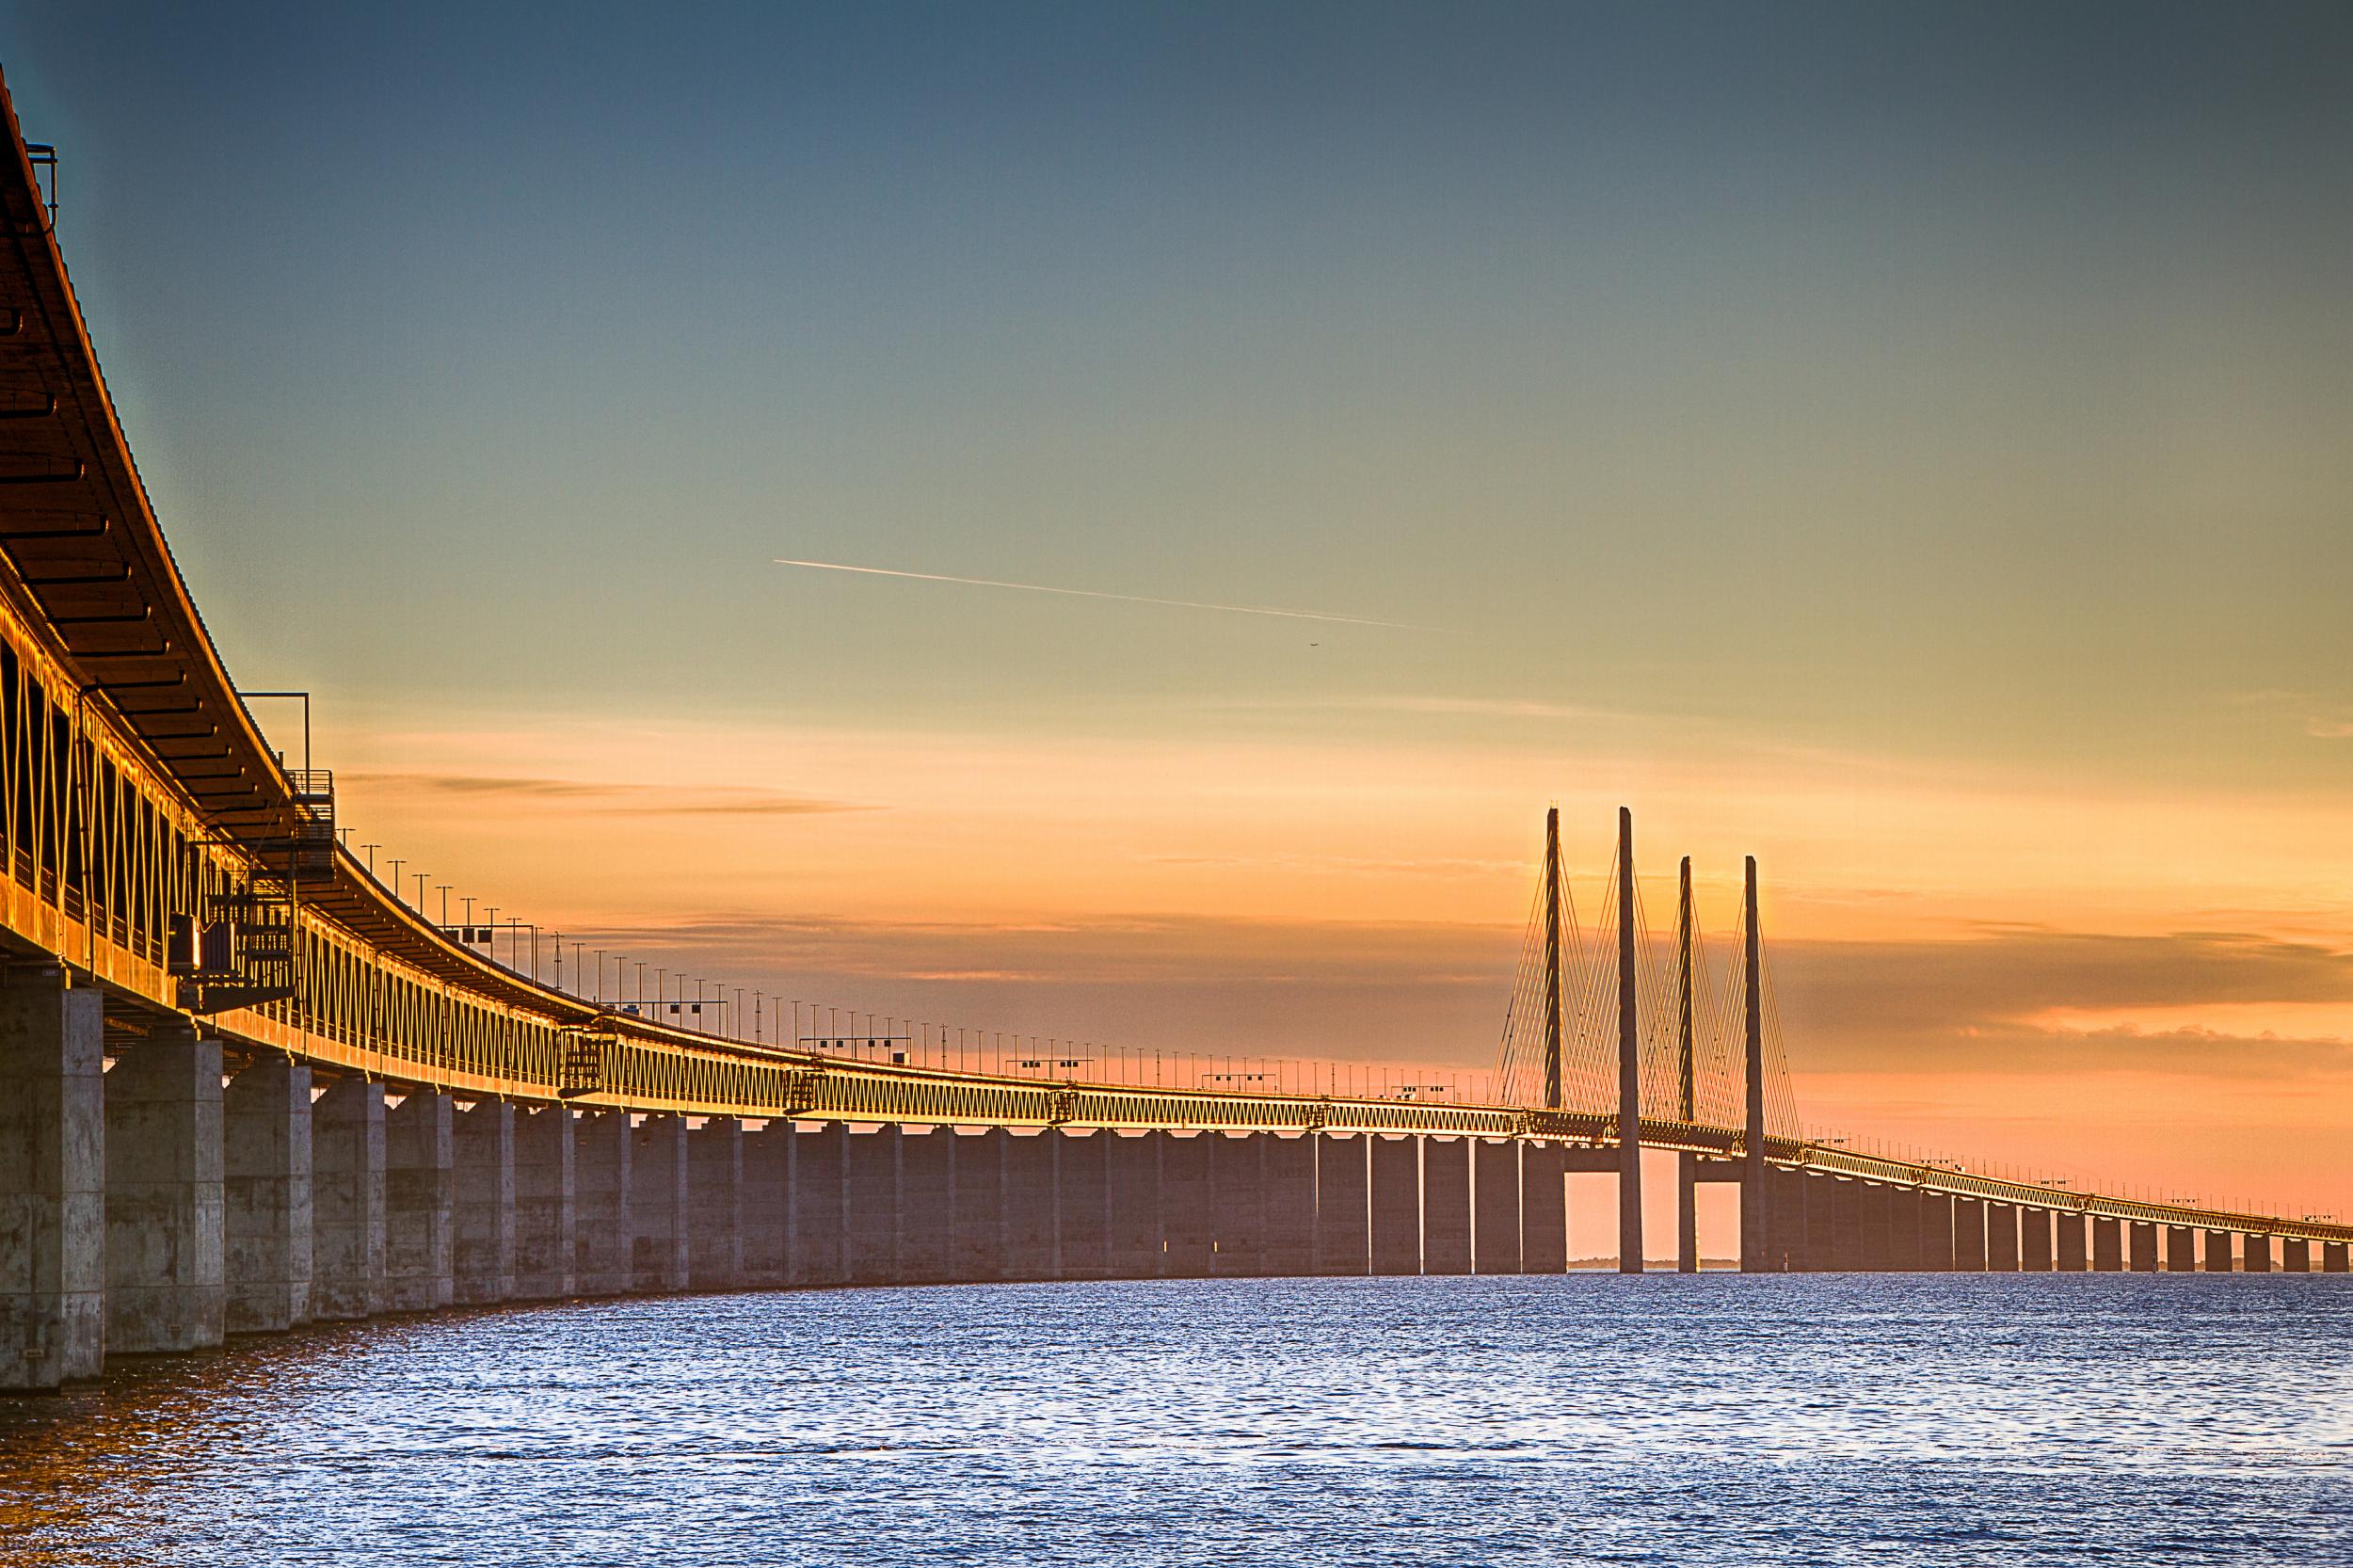 The Öresund Bridge in Malmö